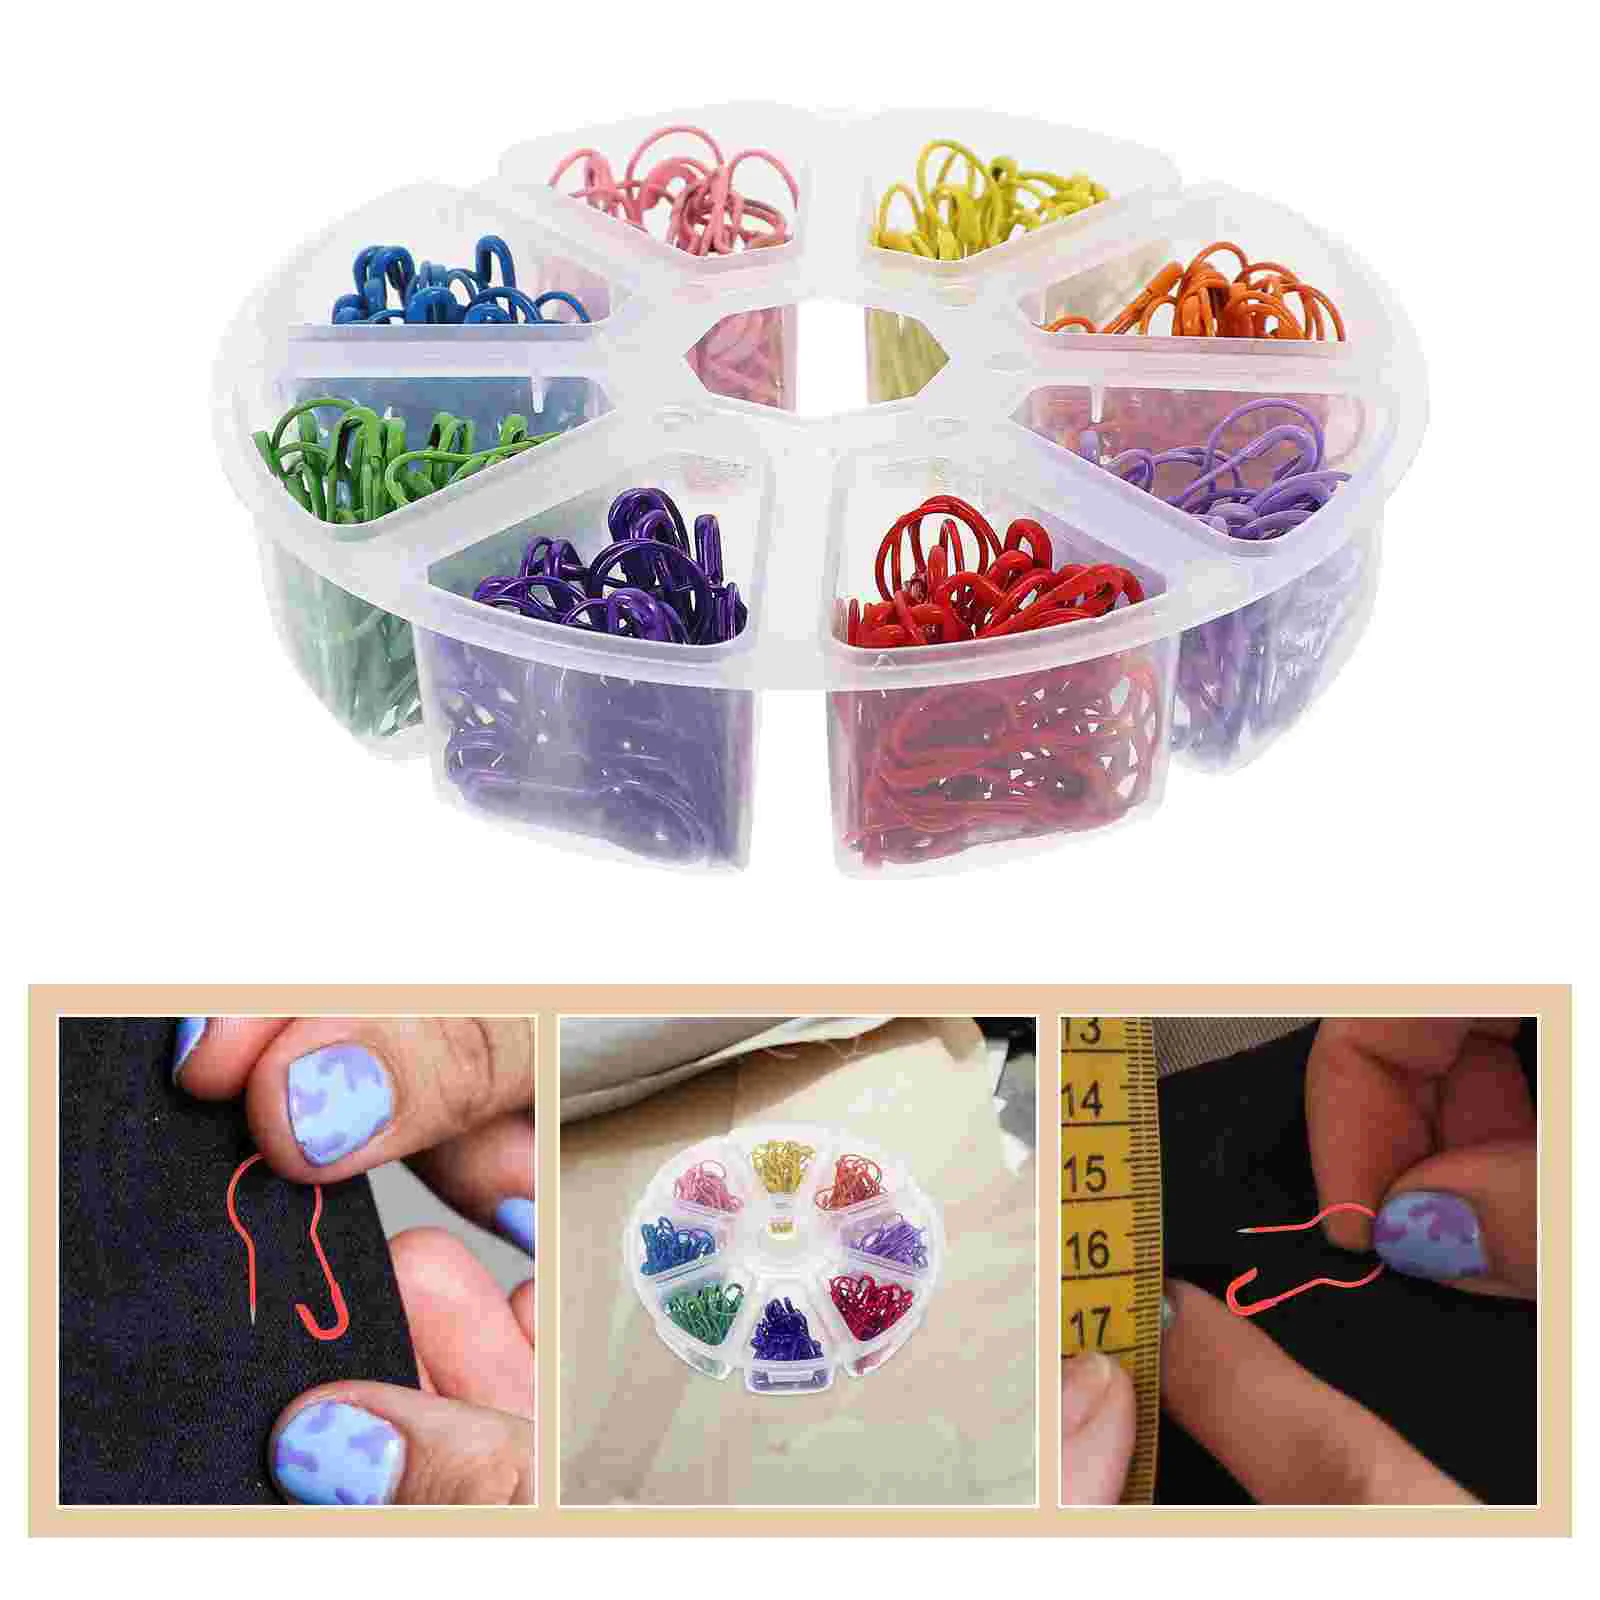 

320Pcs Safety Pin Clothing Tags Pins Bulb Pins Metal Gourd Pin for Knitting Locking Crafting Marking